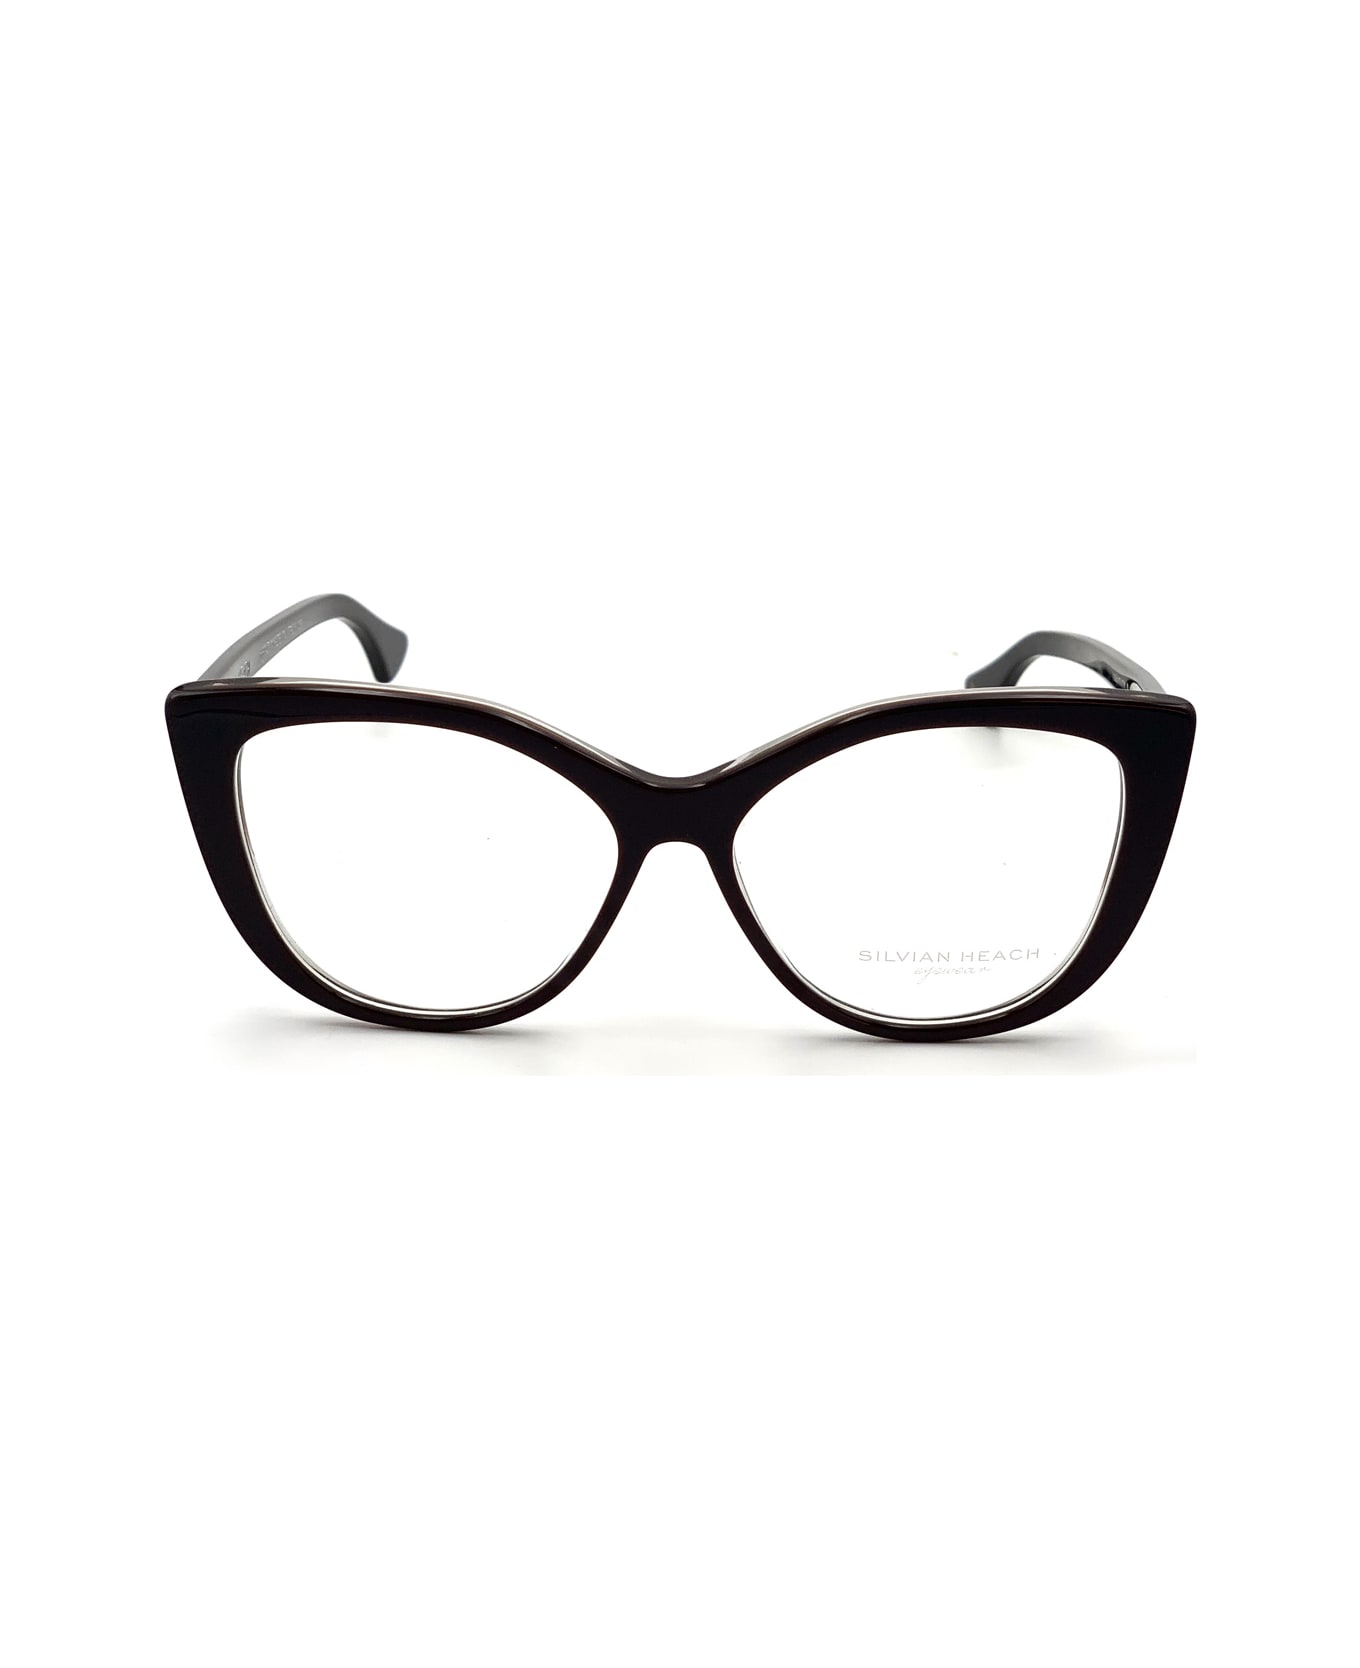 Silvian Heach Identity Glasses - Marrone アイウェア